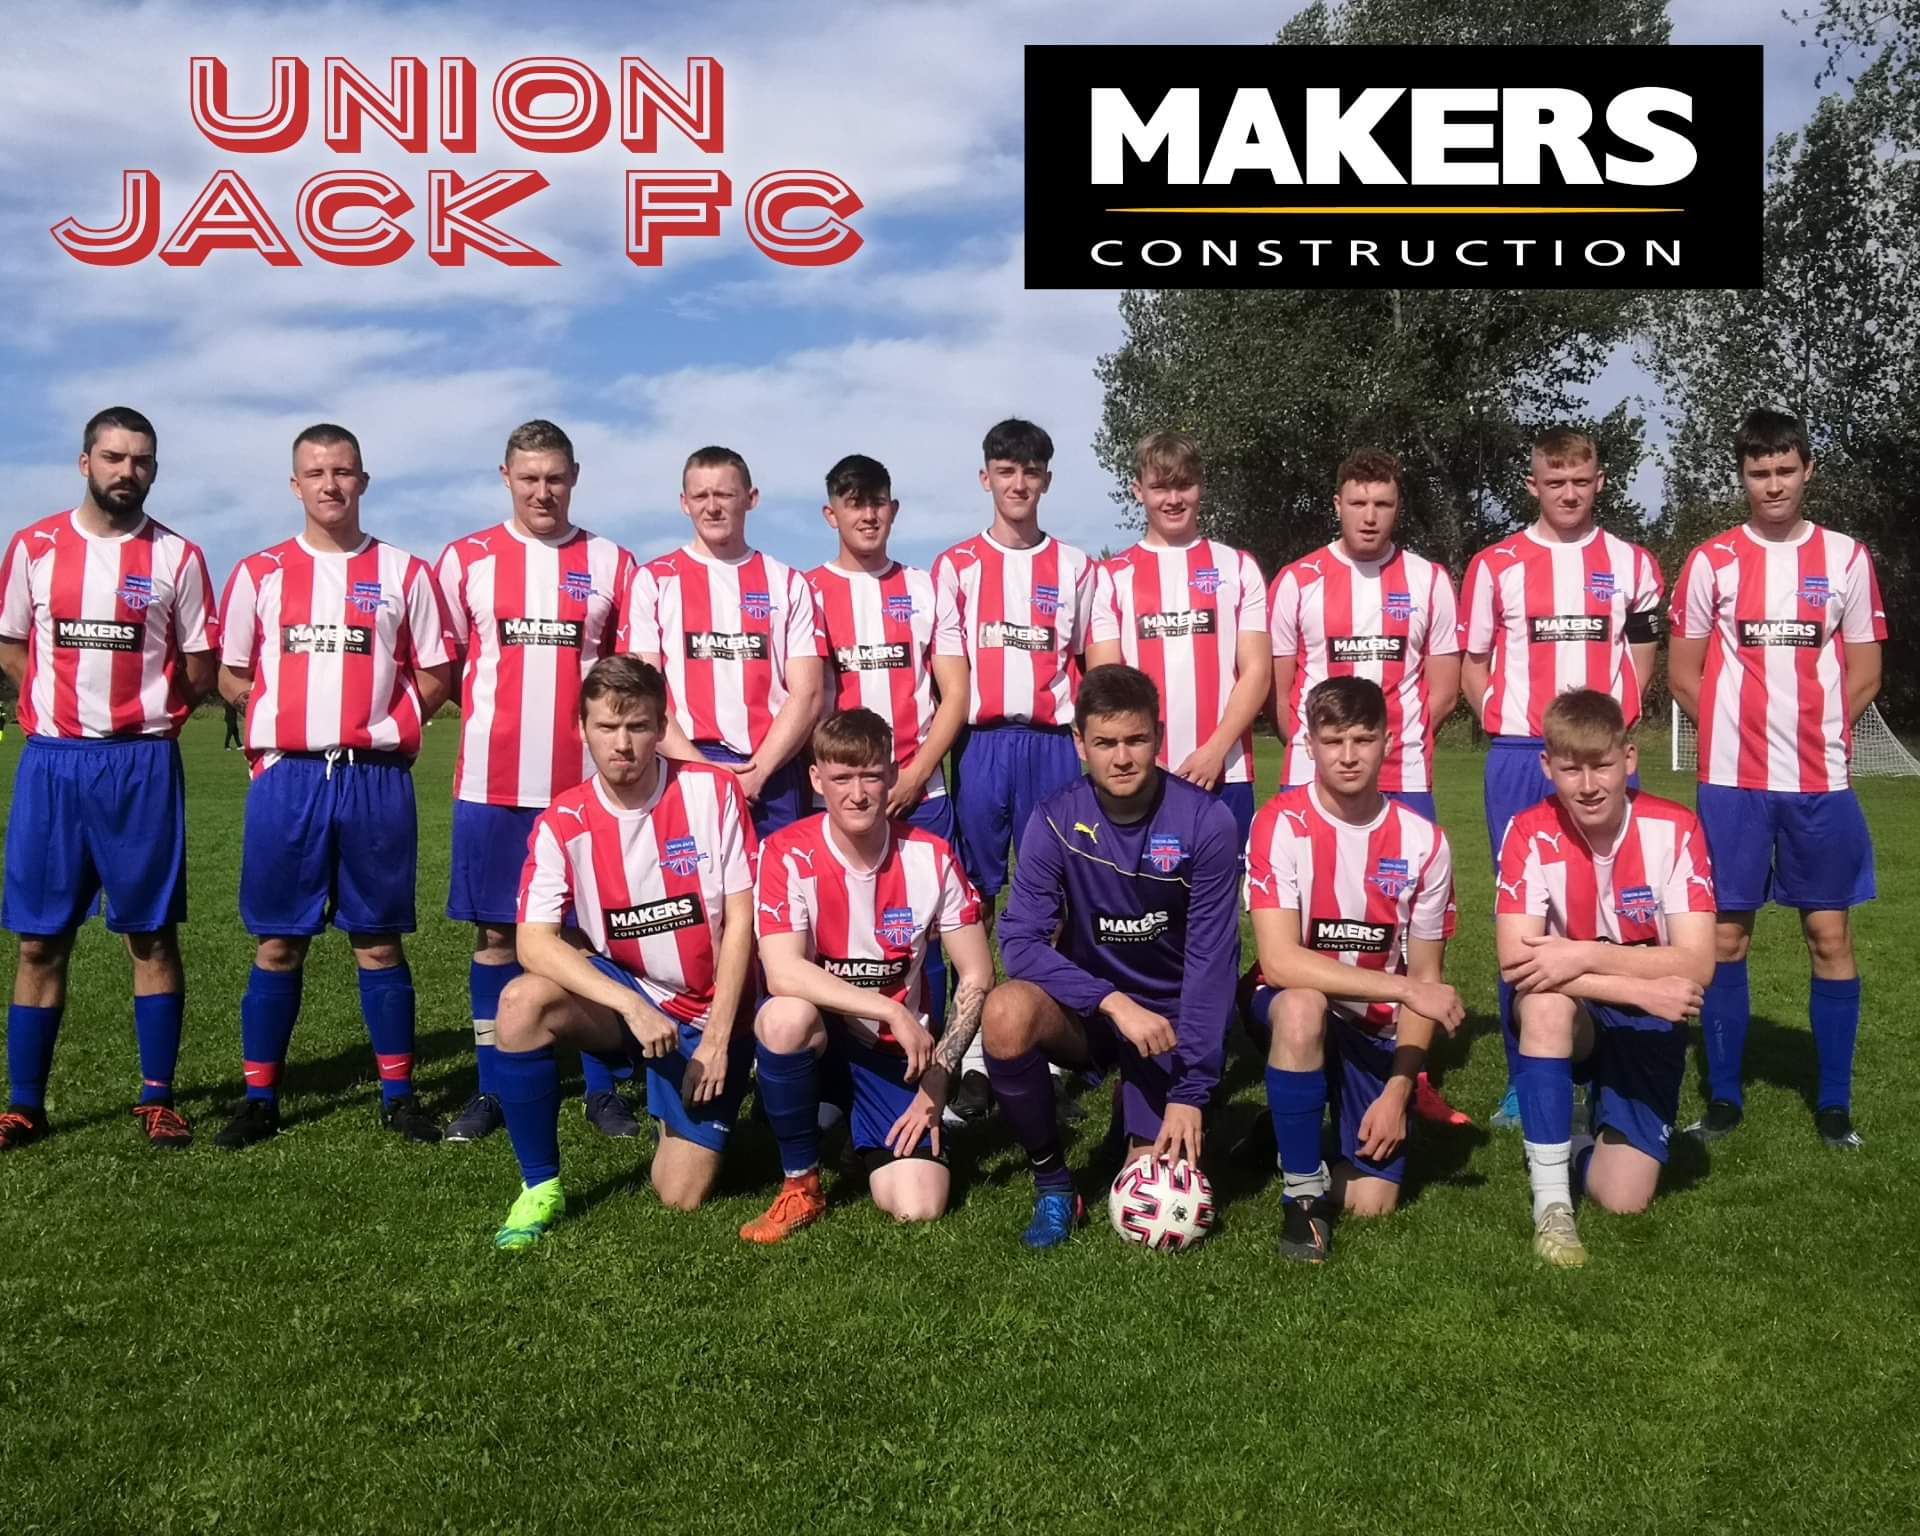 Makers Sponsors Union Jack FC